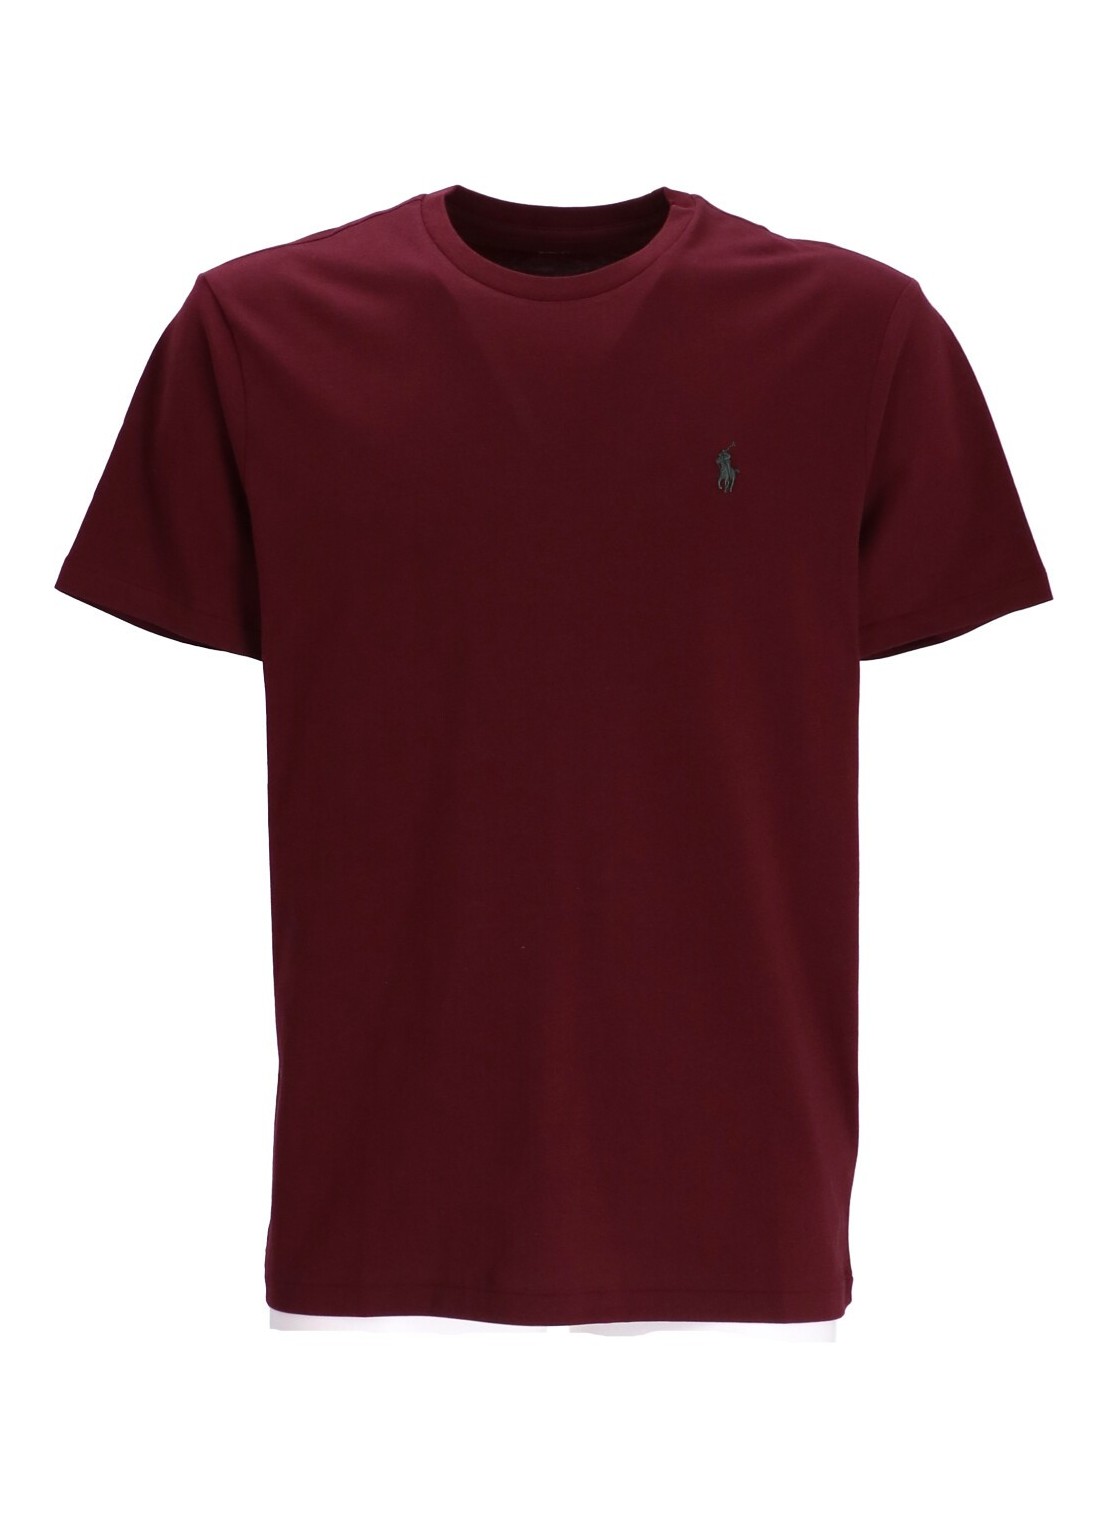 Camiseta polo ralph lauren t-shirt man sscncmslm2-short sleeve-t-shirt 710671438339 harvard wine c59